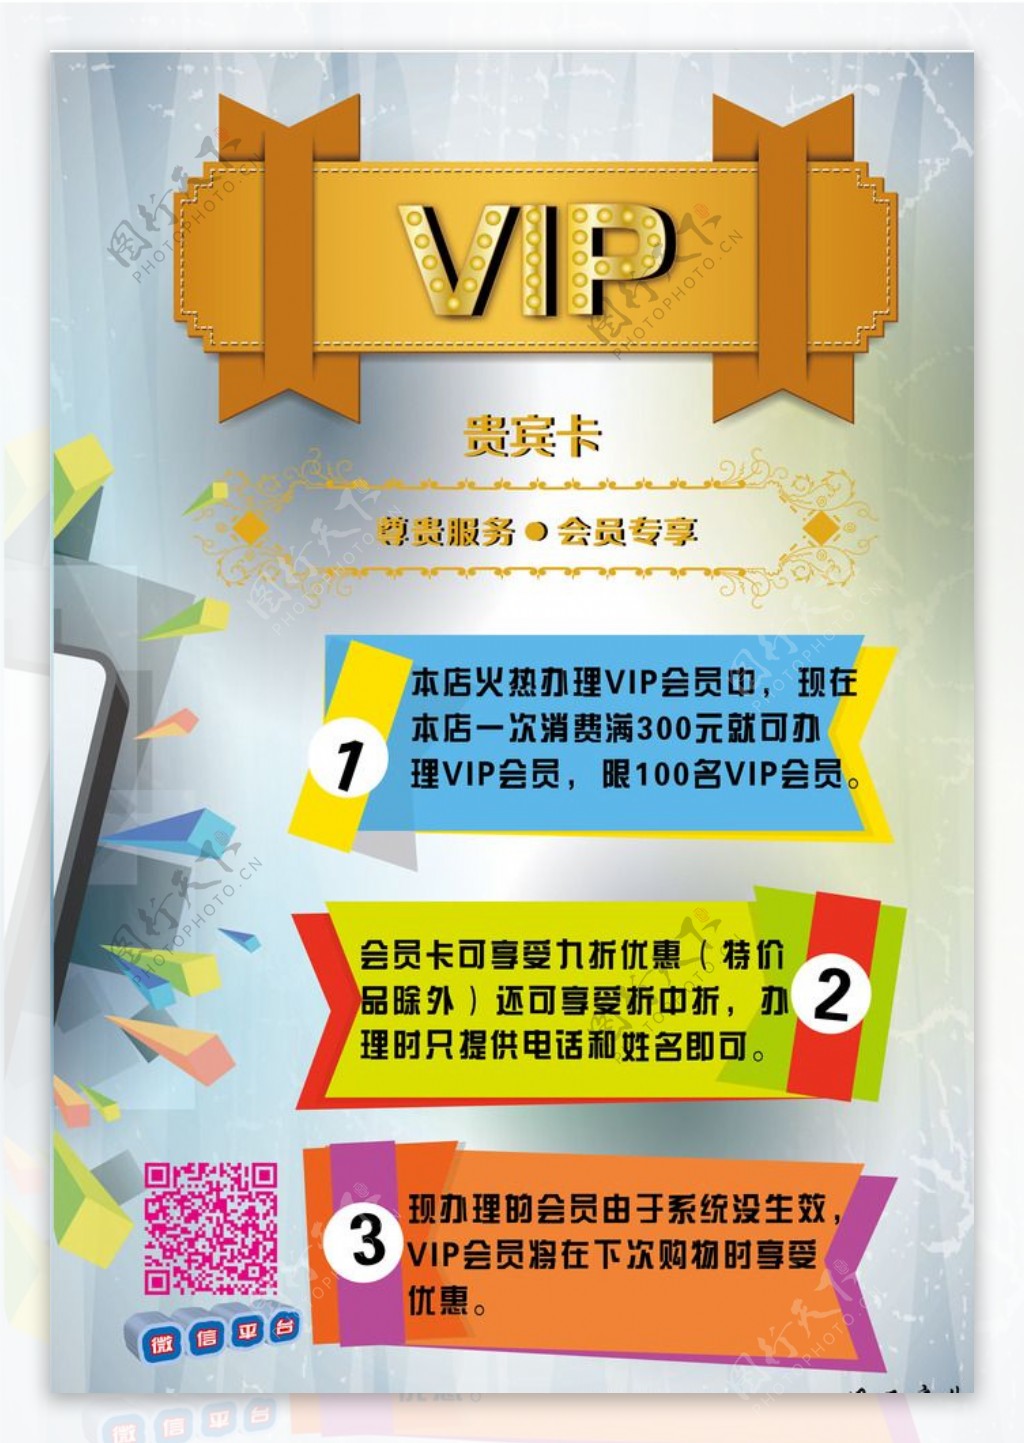 VIP招募会员卡图片